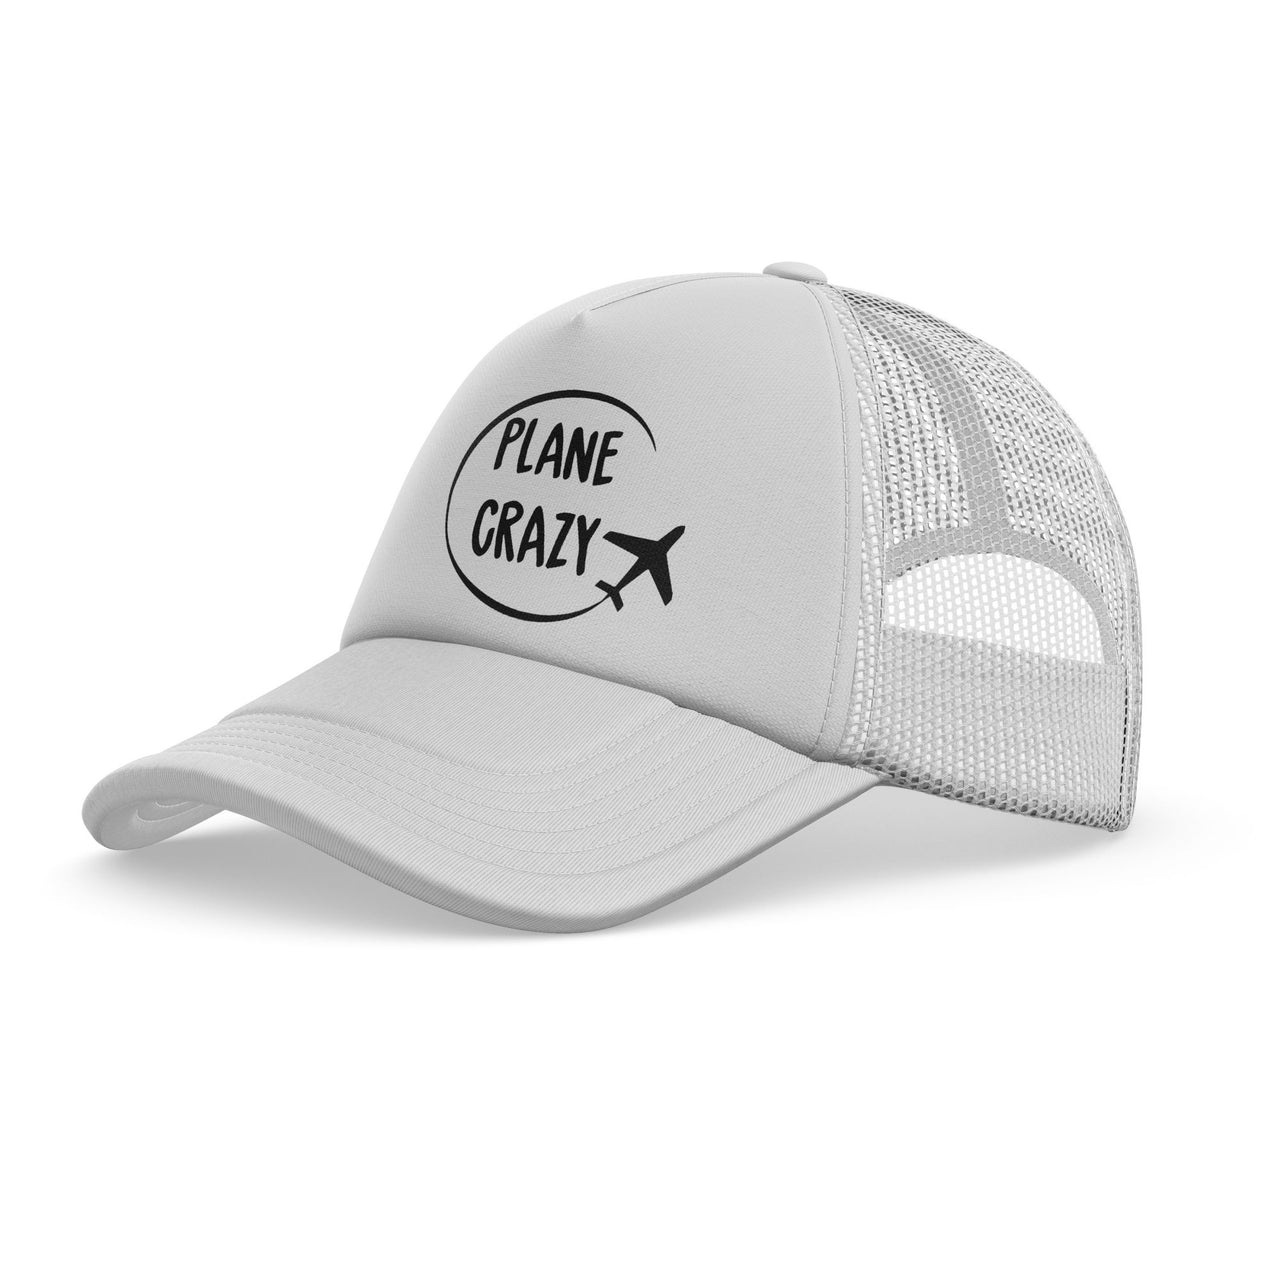 Plane Crazy Designed Trucker Caps & Hats